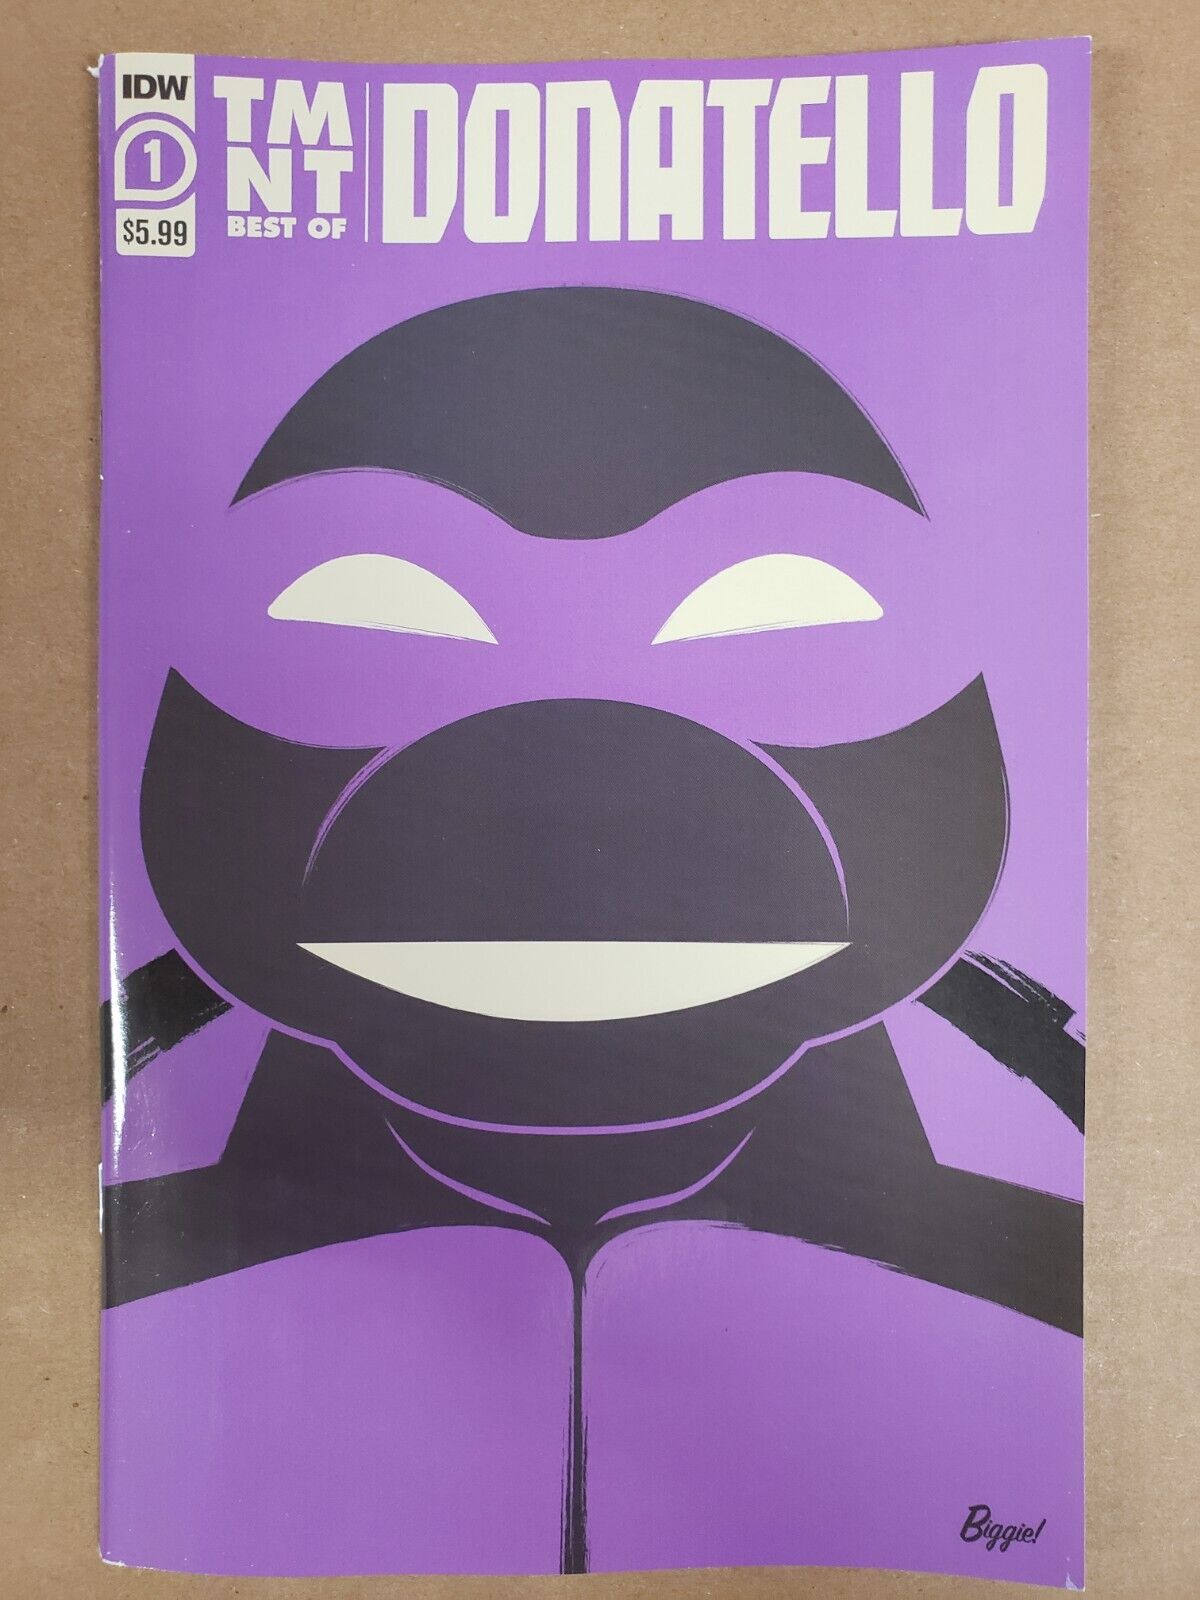 TMNT: Best of Donatello #1 one-shot / IDW / Teenage Mutant Ninja Turtles